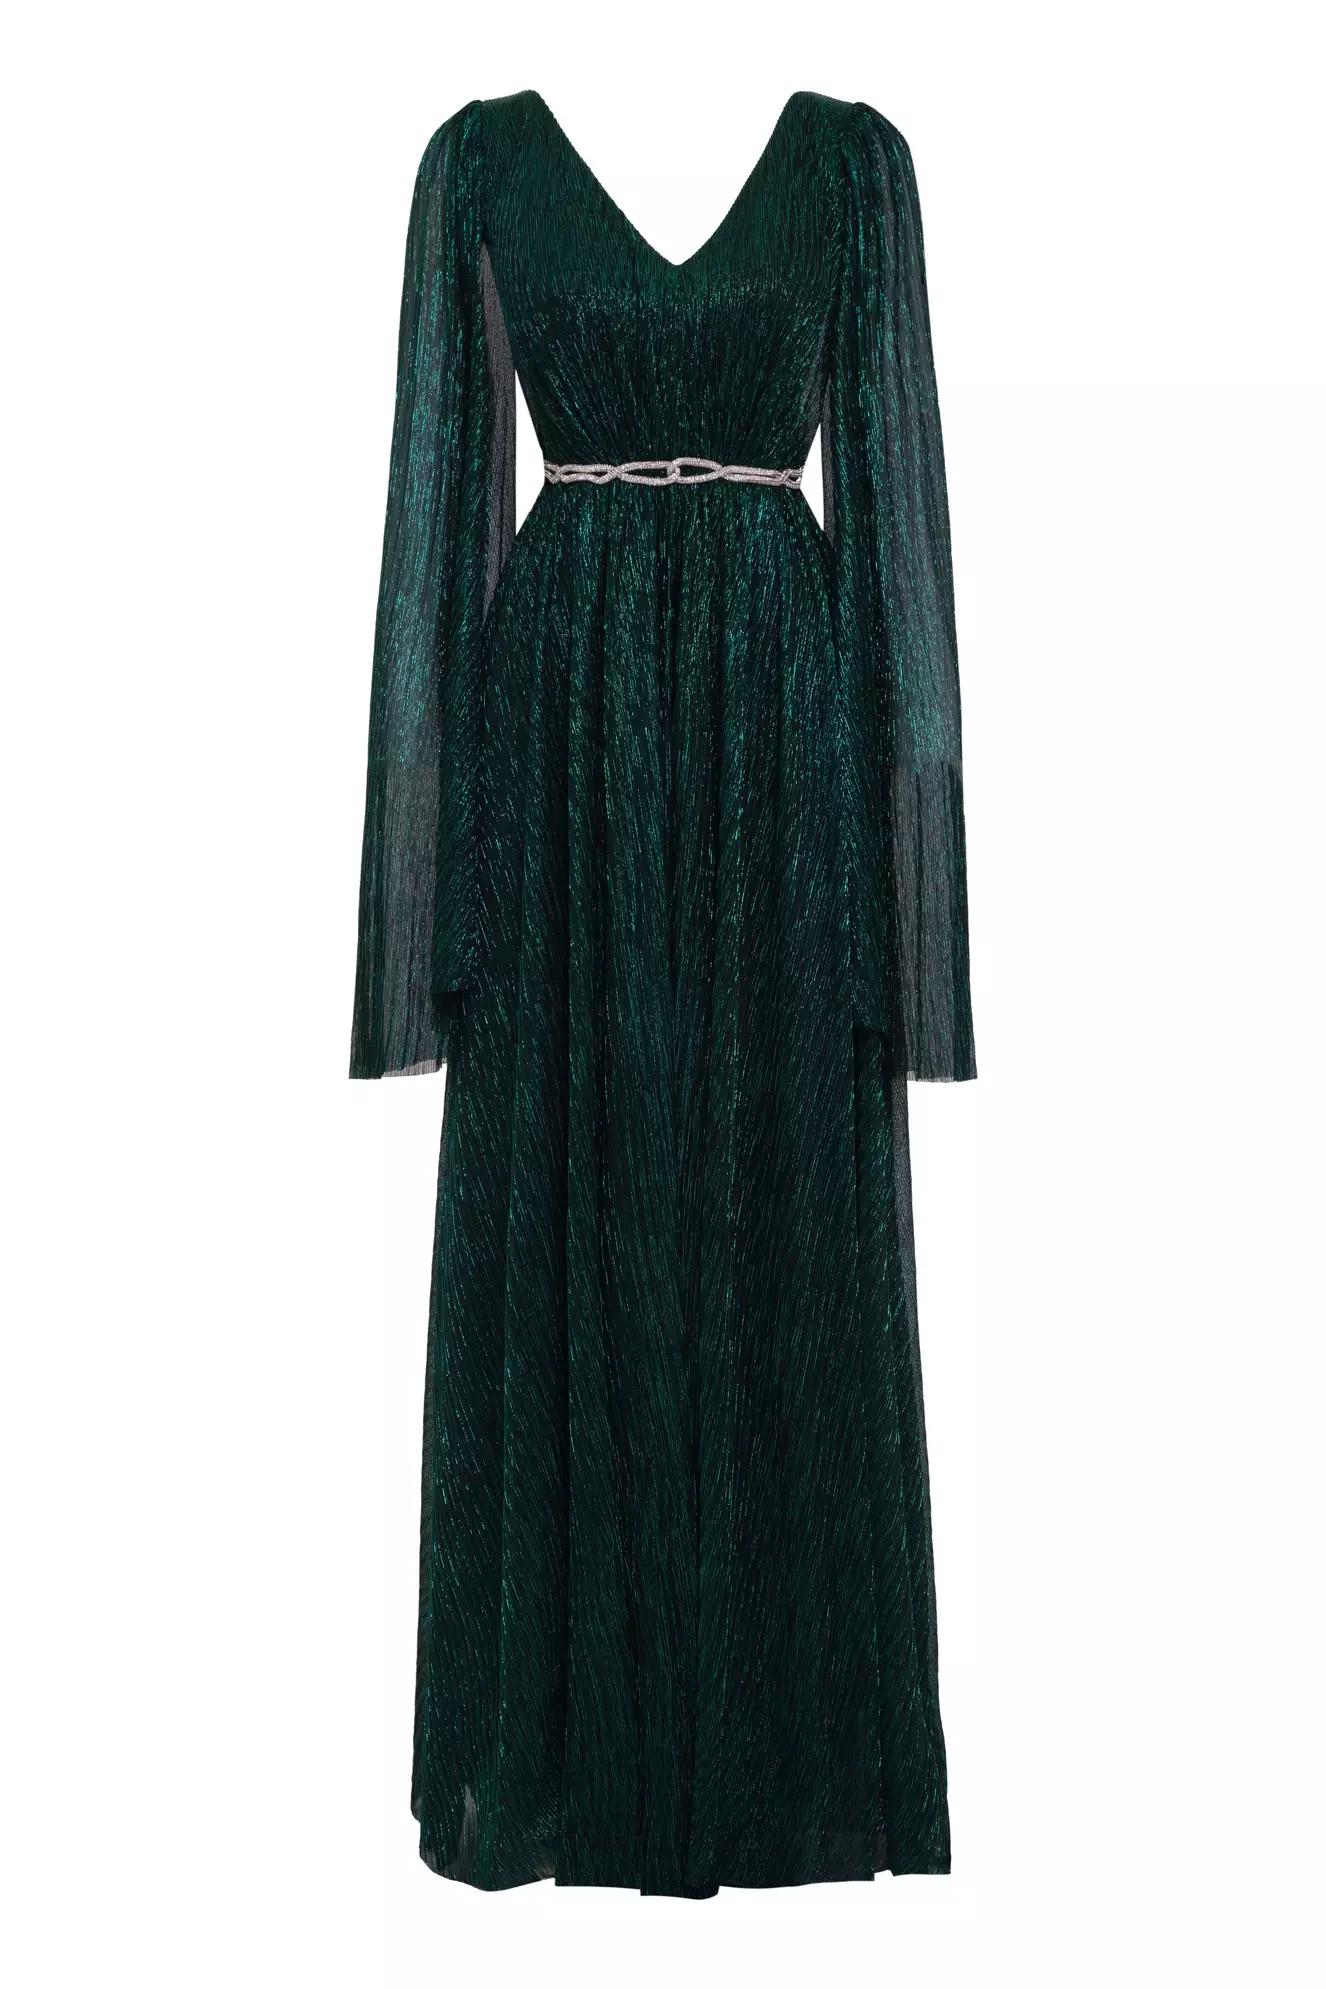 Green moonlight sleeveless maxi dress